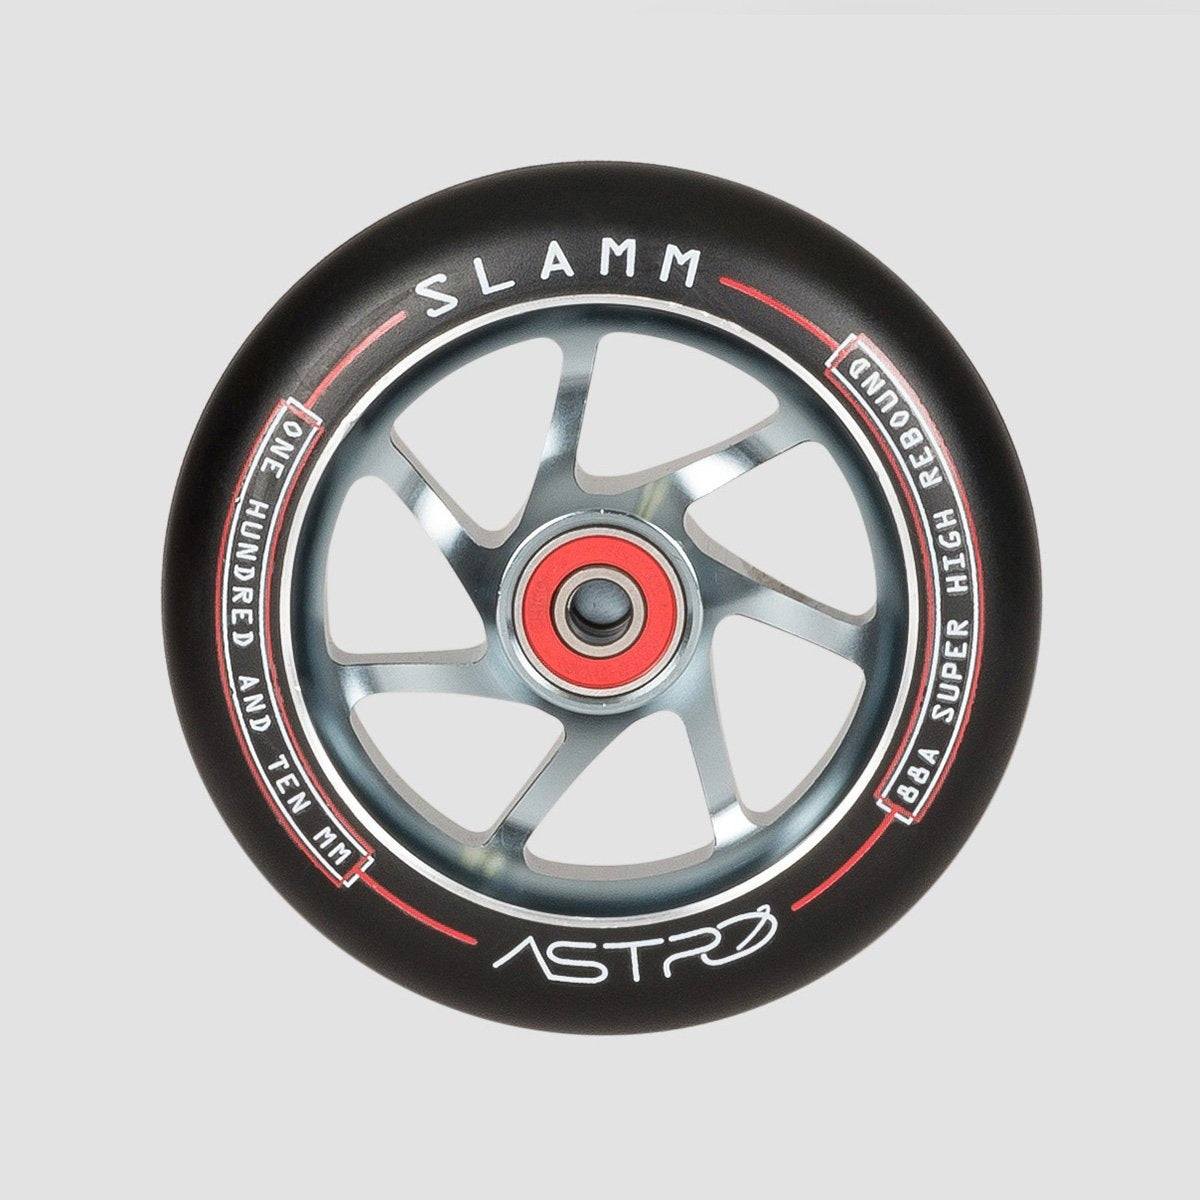 Slamm Astro Scooter Wheel x1 Titanium 110mm - Scooter